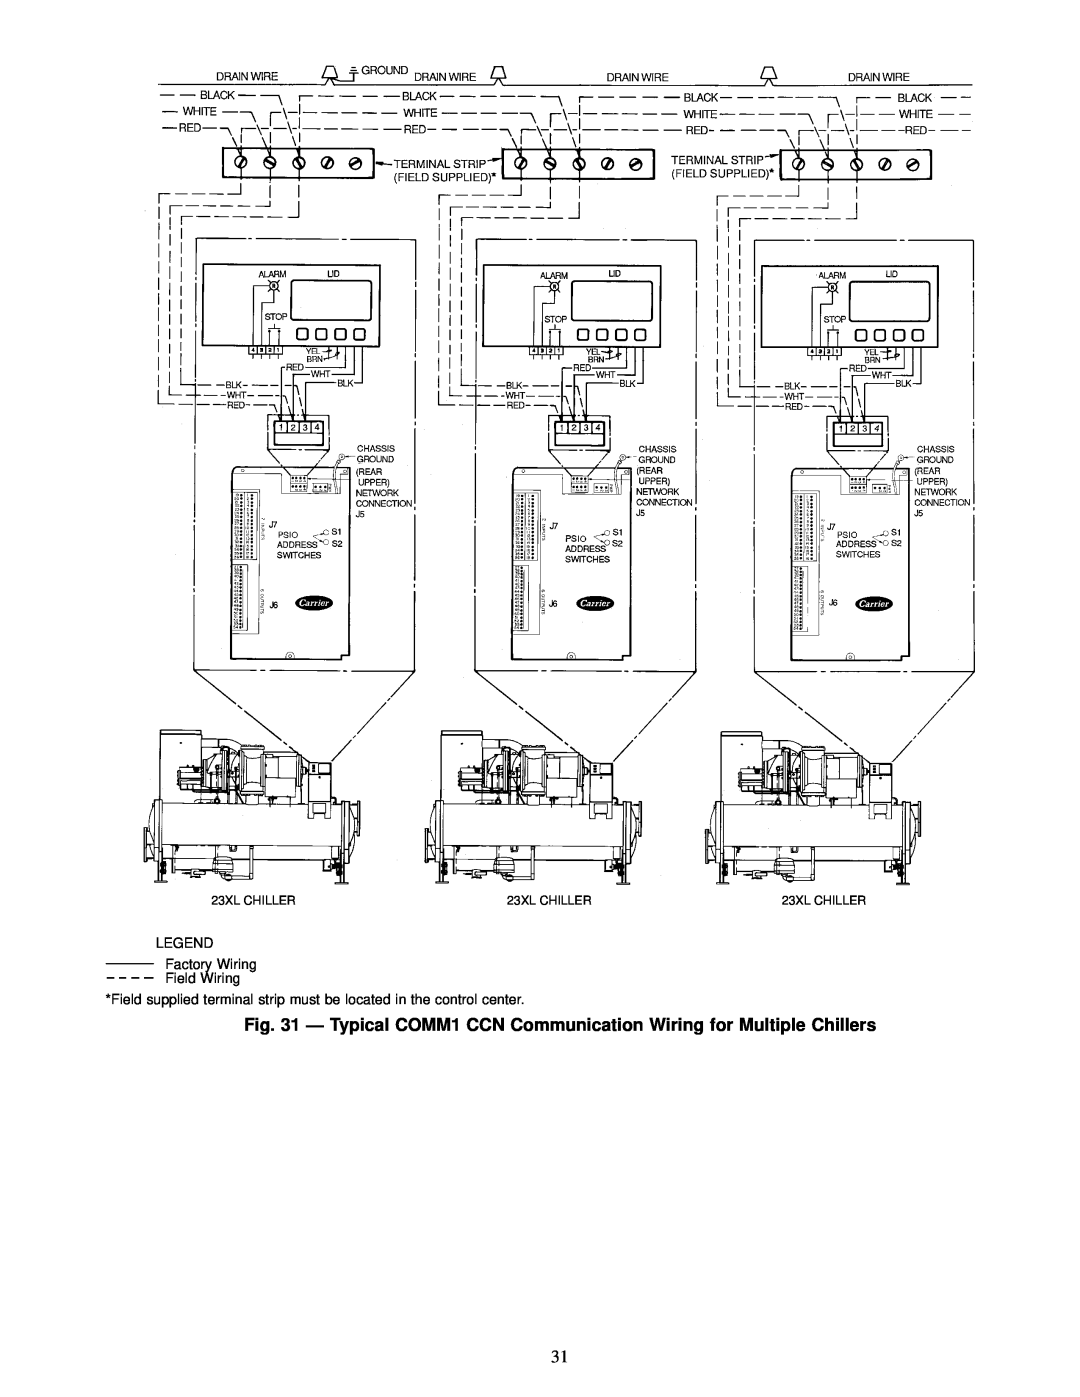 Carrier 23 XL installation instructions LEGEND Factory Wiring Field Wiring, 23XL CHILLER 